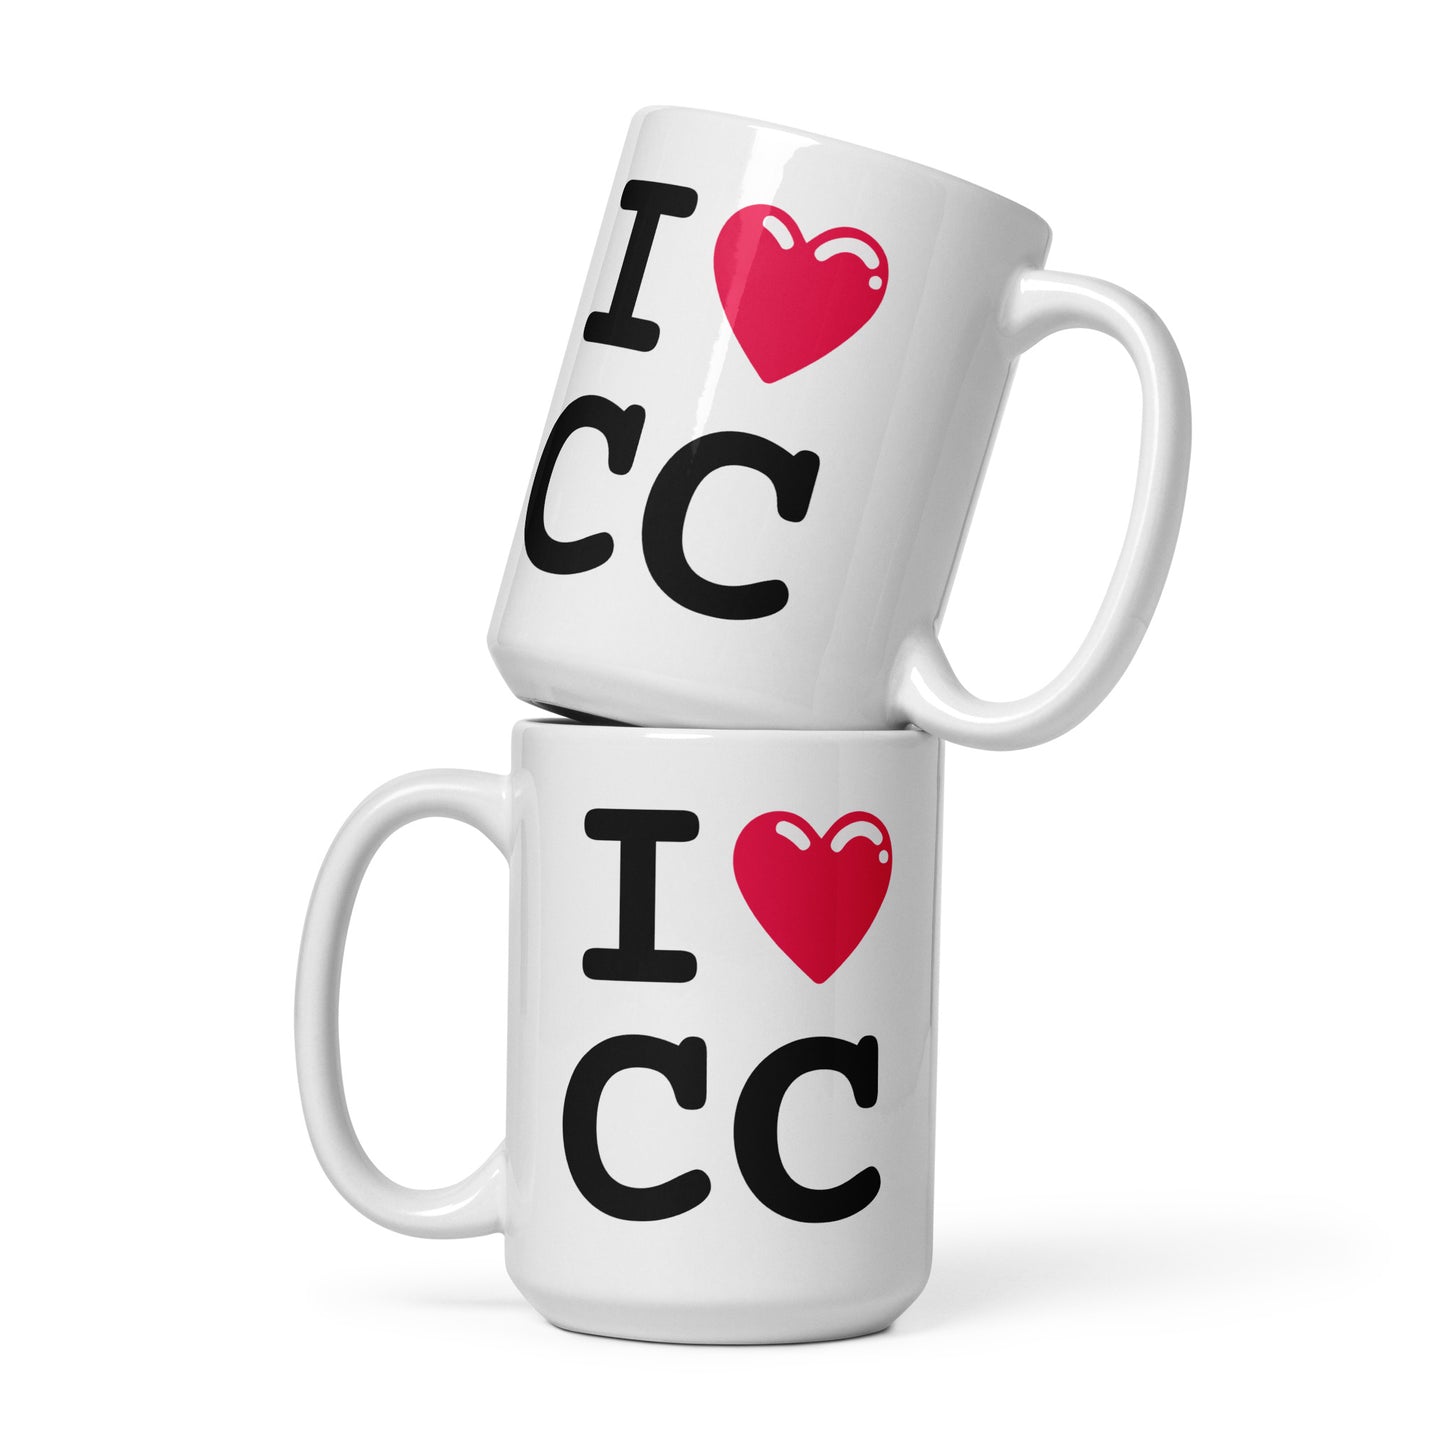 Crowd Control™ - Glossy Mug - I Heart CC